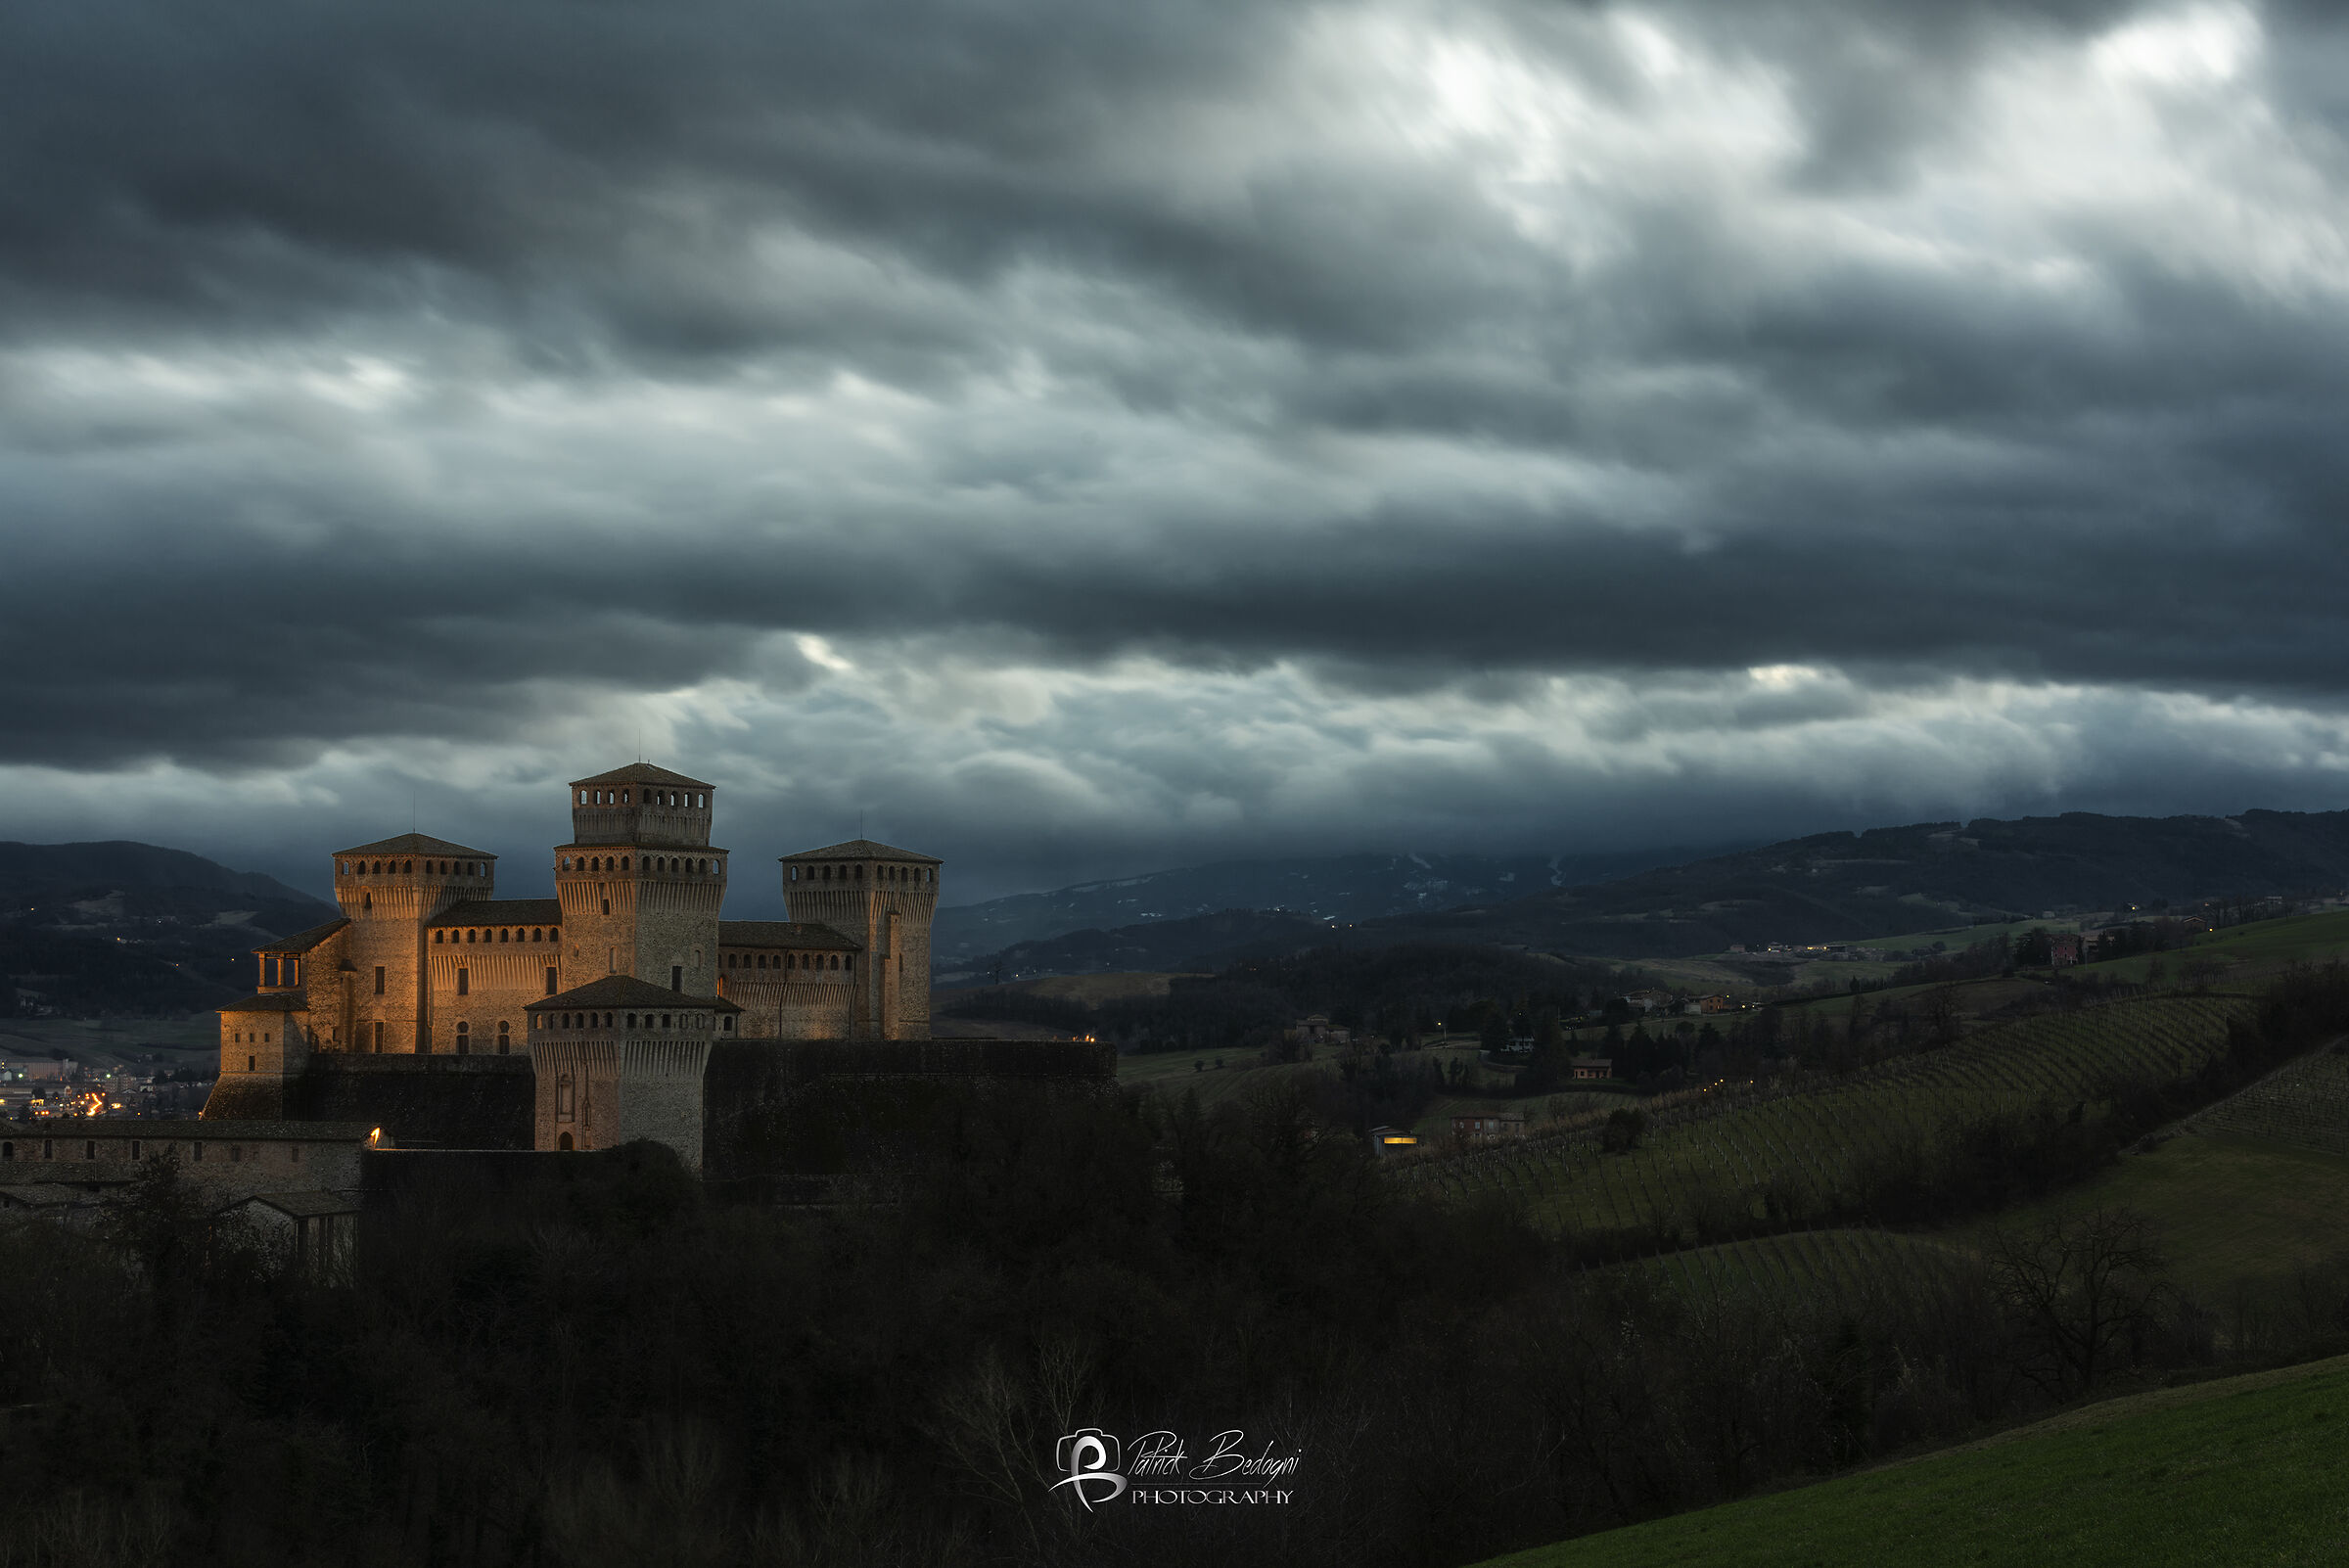 The castle of Torrechiara...